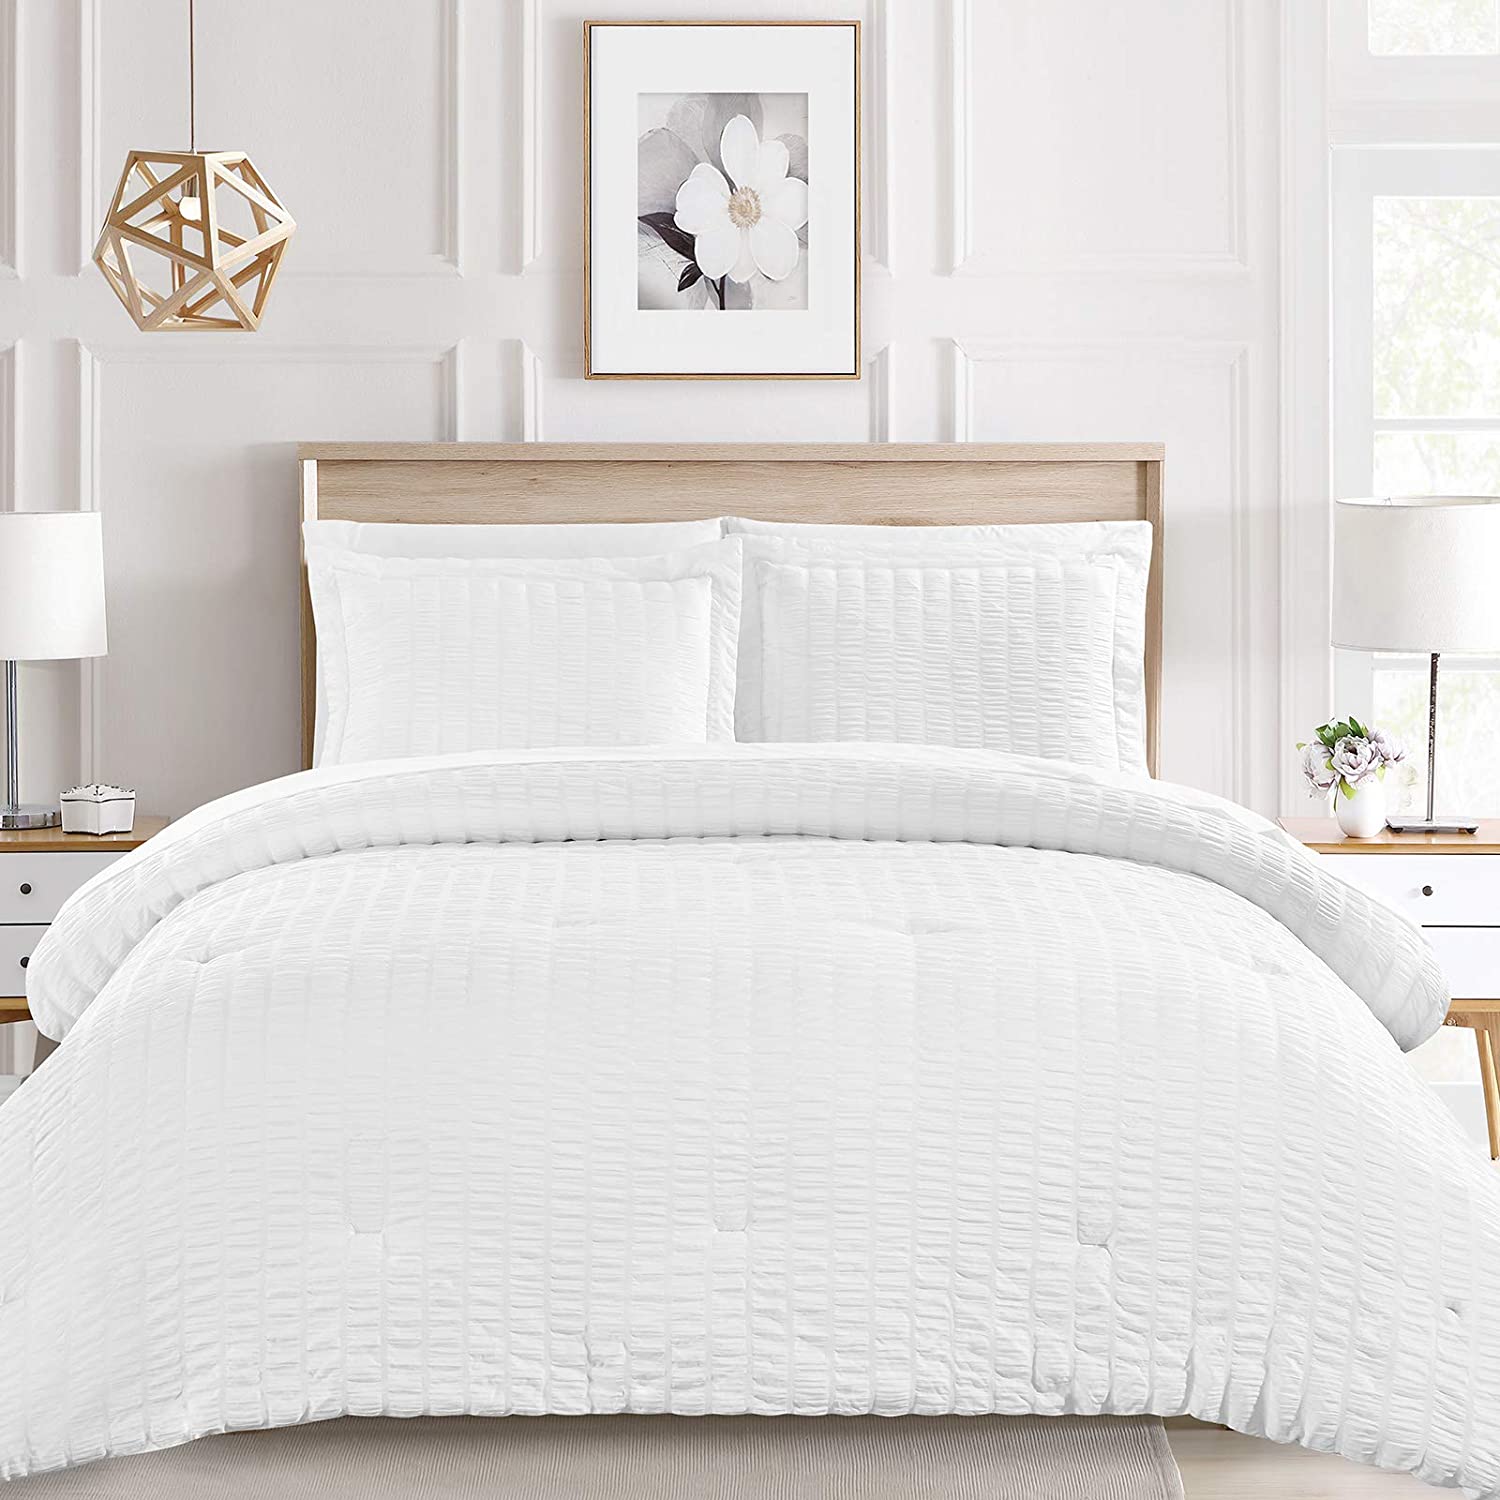 Details about   HIG 7 Pieces White Seersucker Luxury Style Comforter Set-Queen King size-22027 